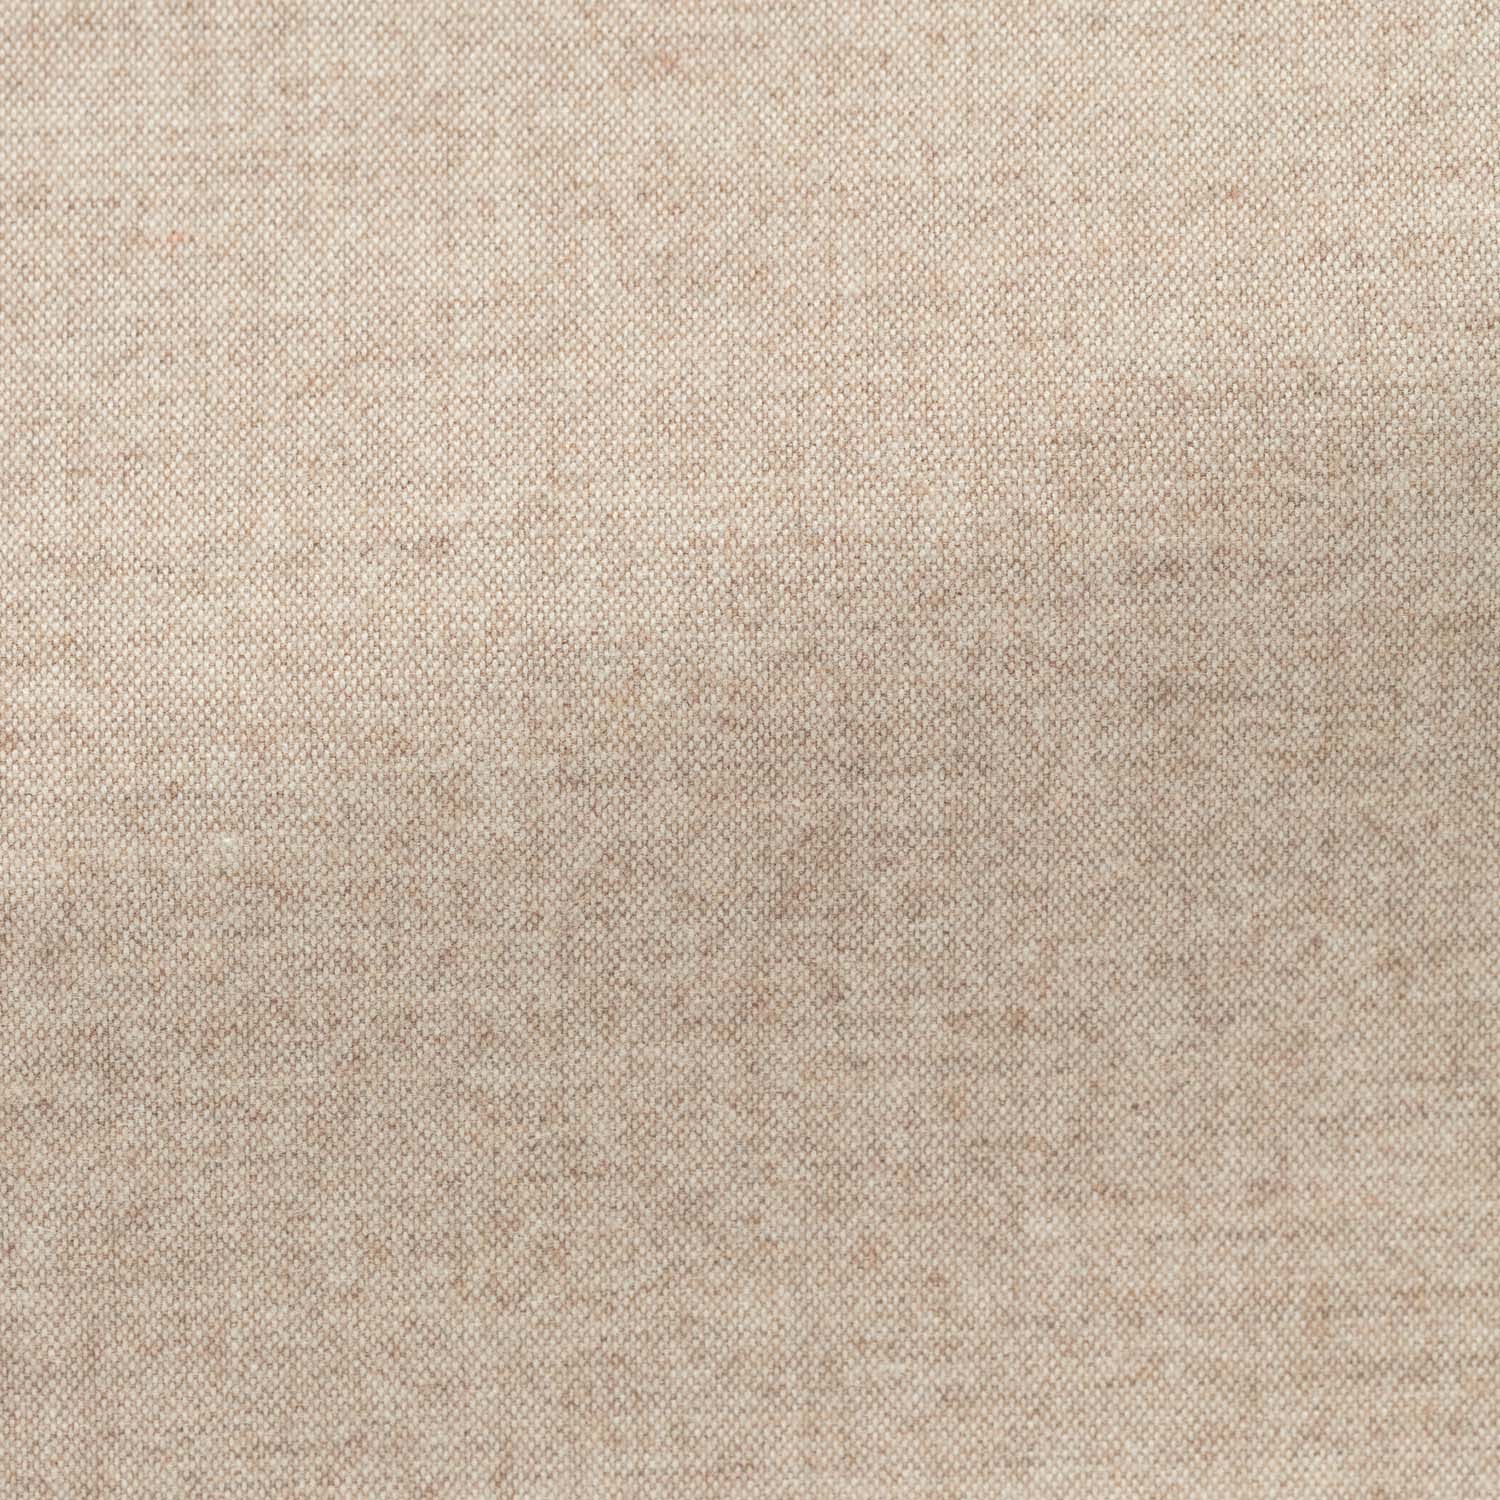 SH00221 Fabric Sample image 1